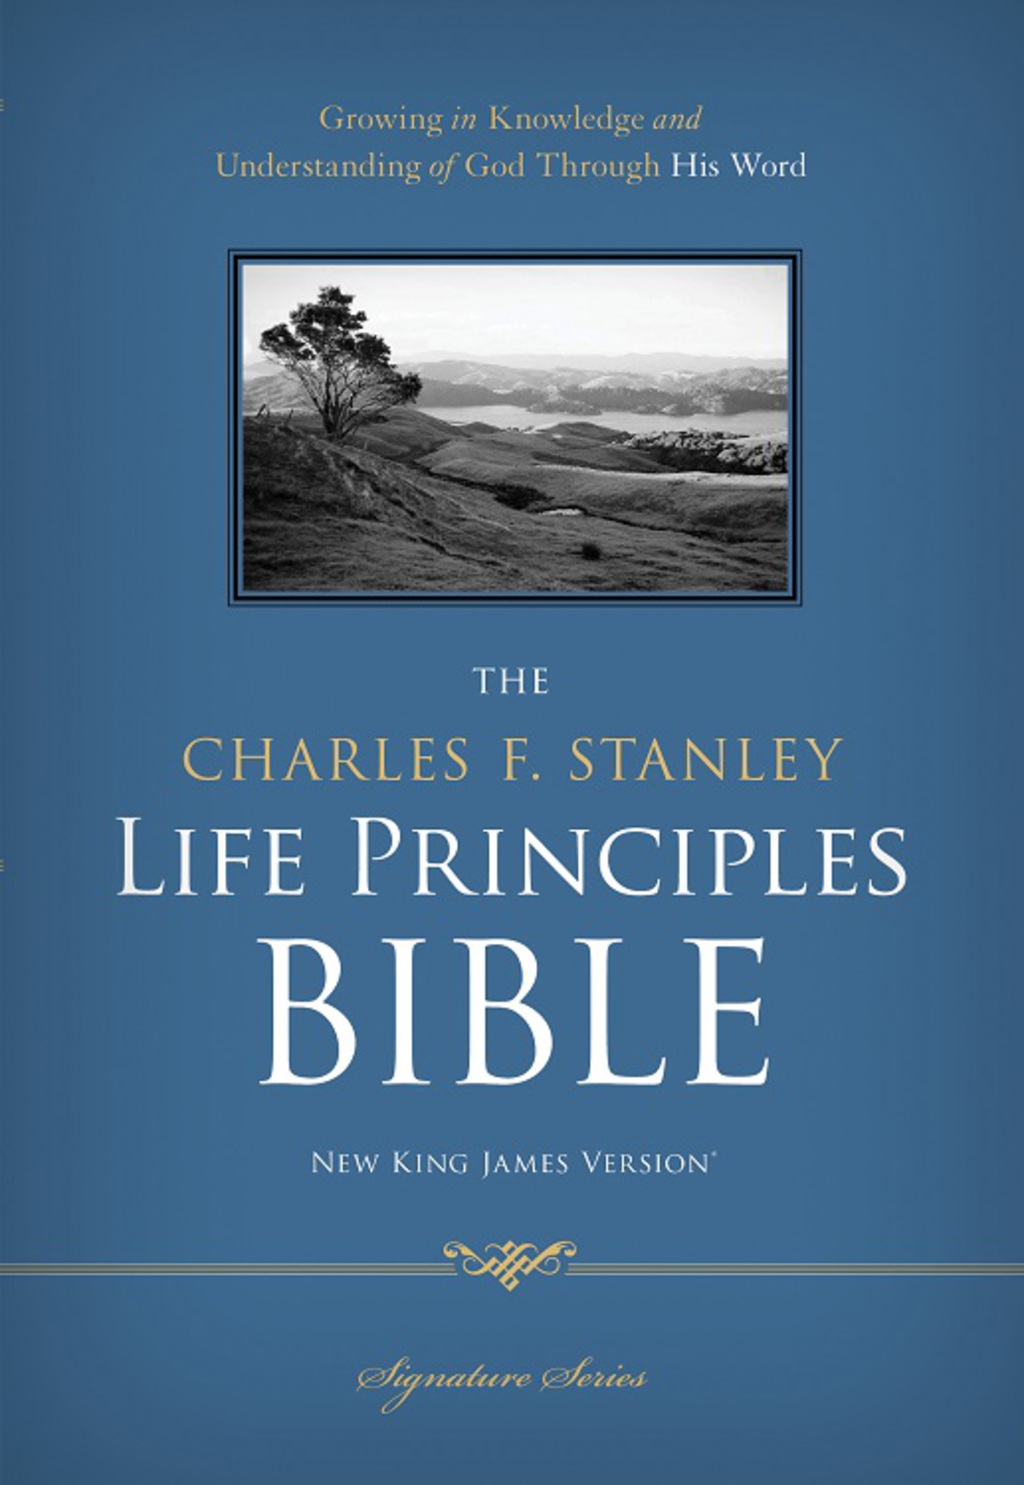 NKJV  The Charles F. Stanley Life Principles Bible (eBook) - Thomas Nelson,